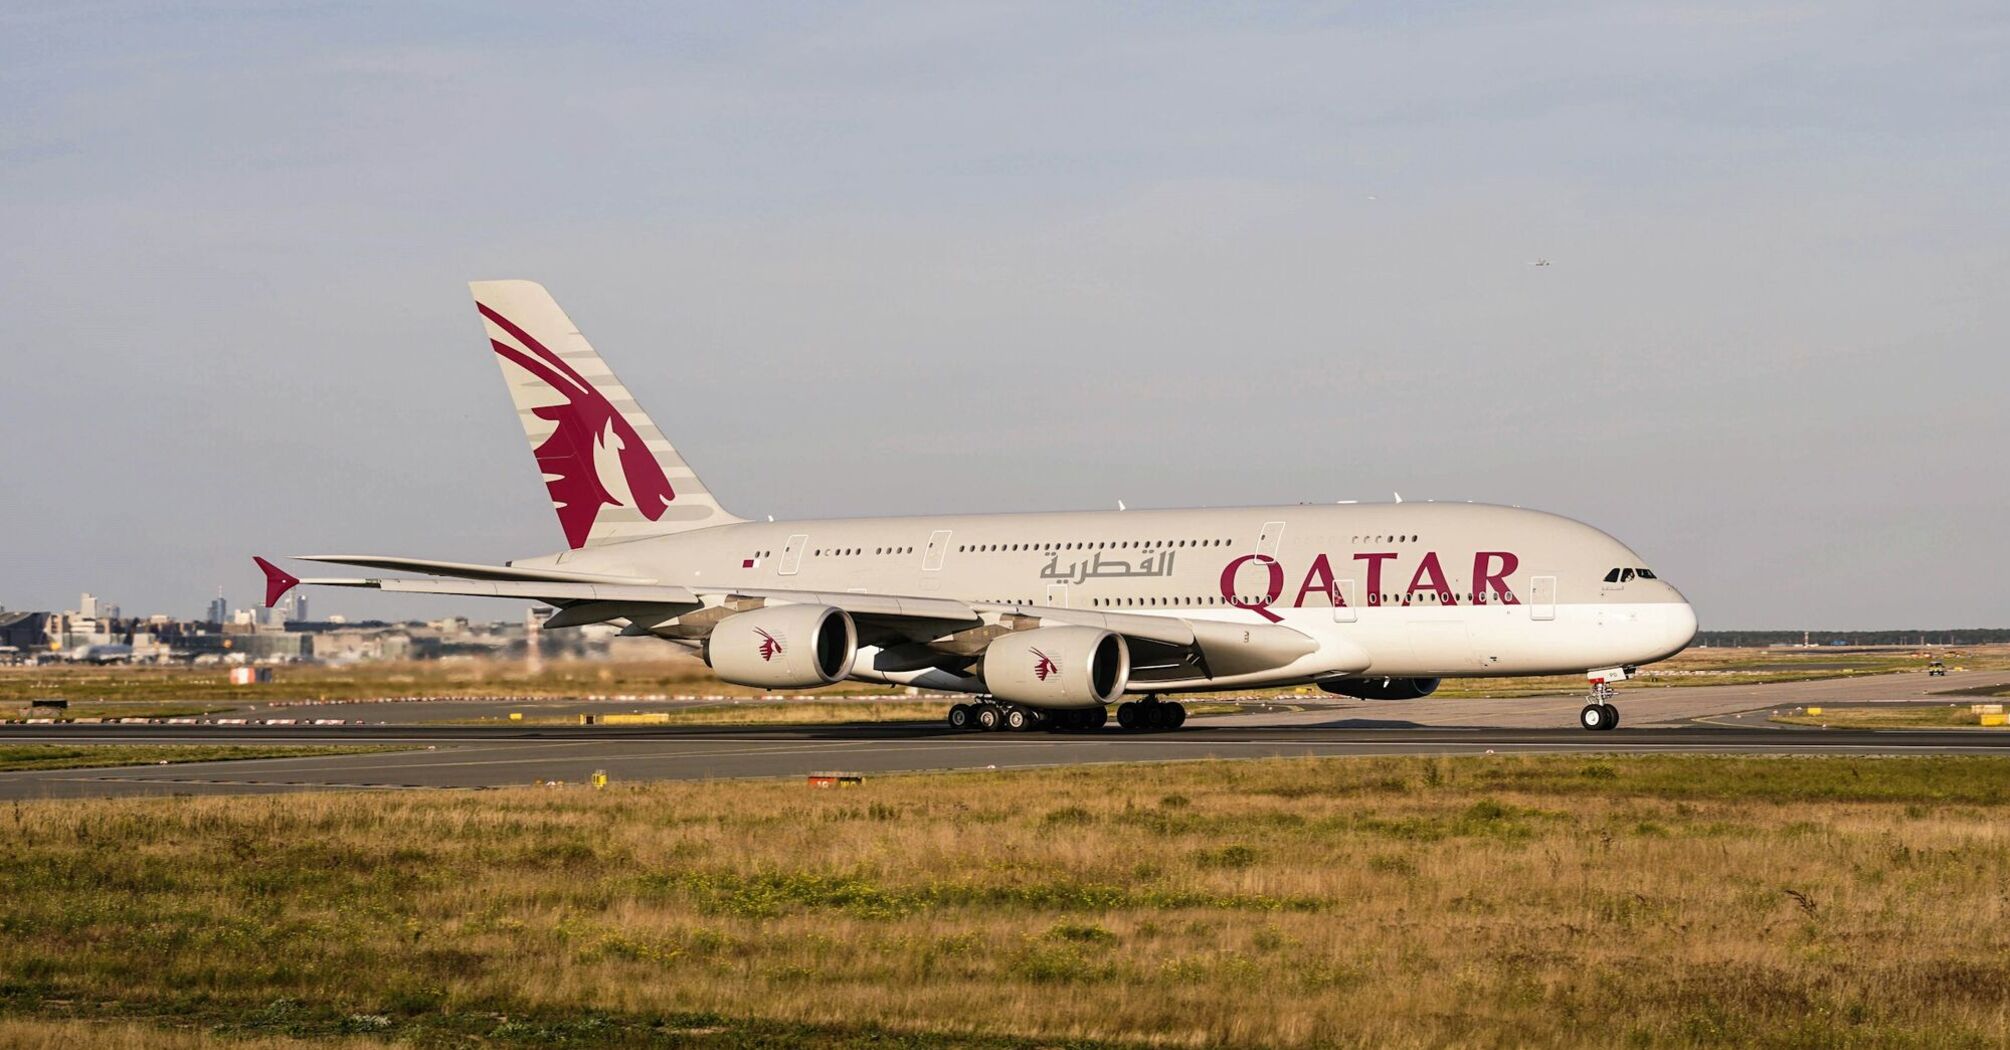 Qatar Airways aircraft on the runway